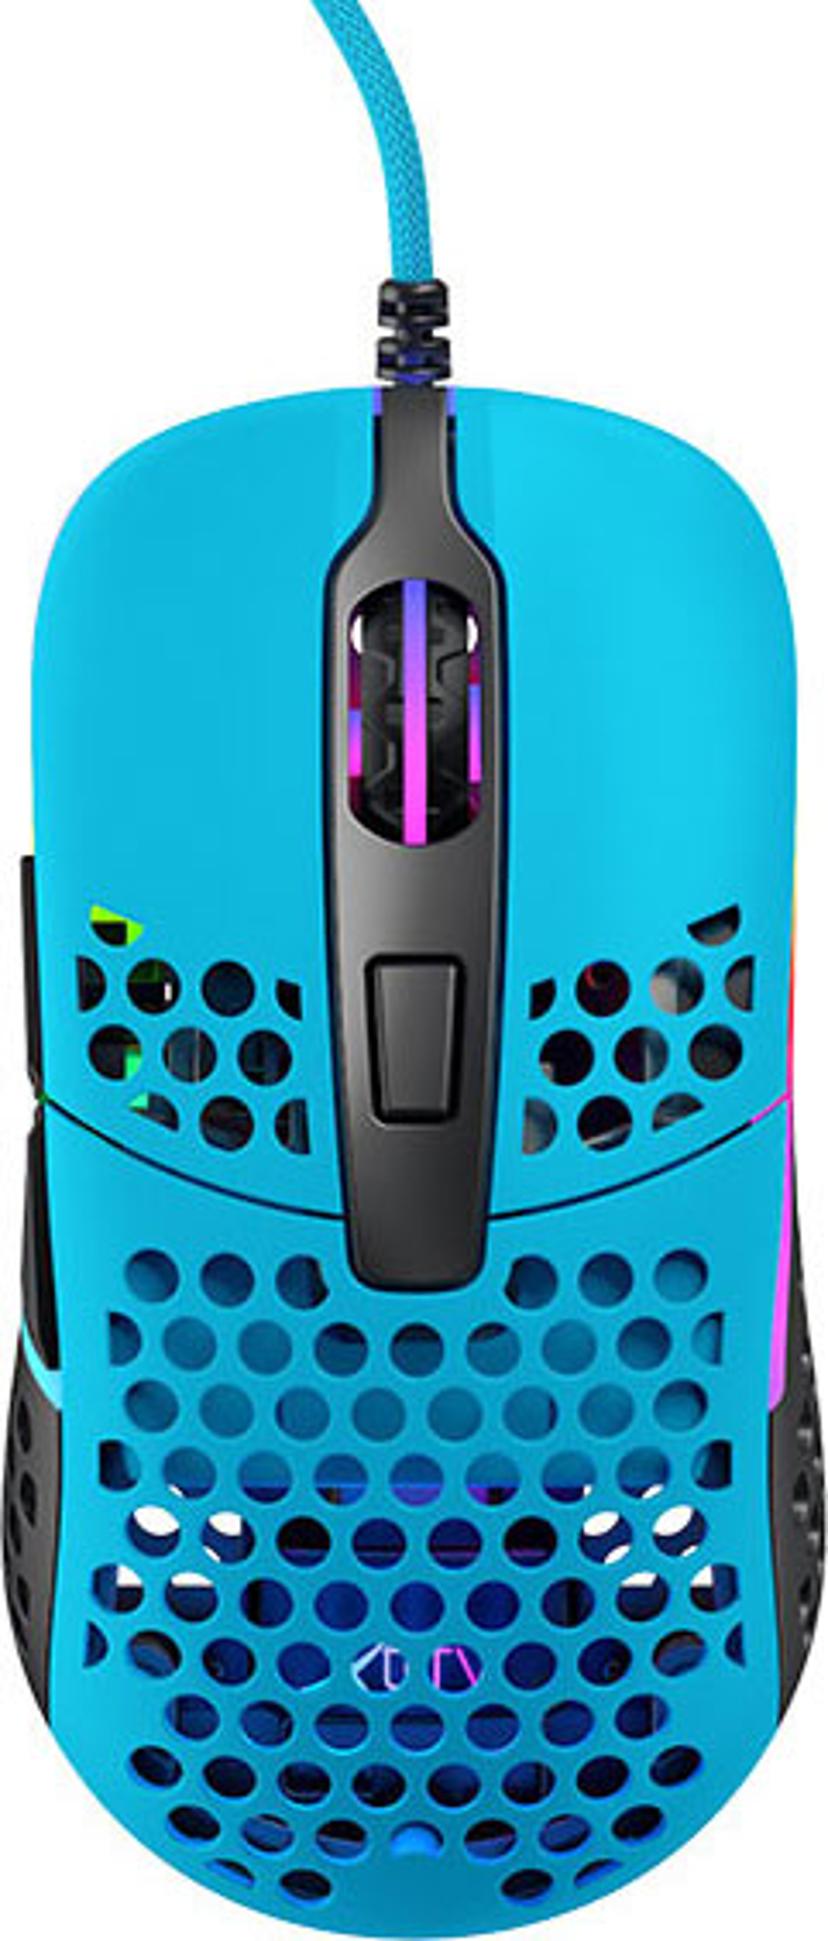 Xtrfy M42 RGB Gaming Mouse Miami Blue USB A-tyyppi 16000dpi